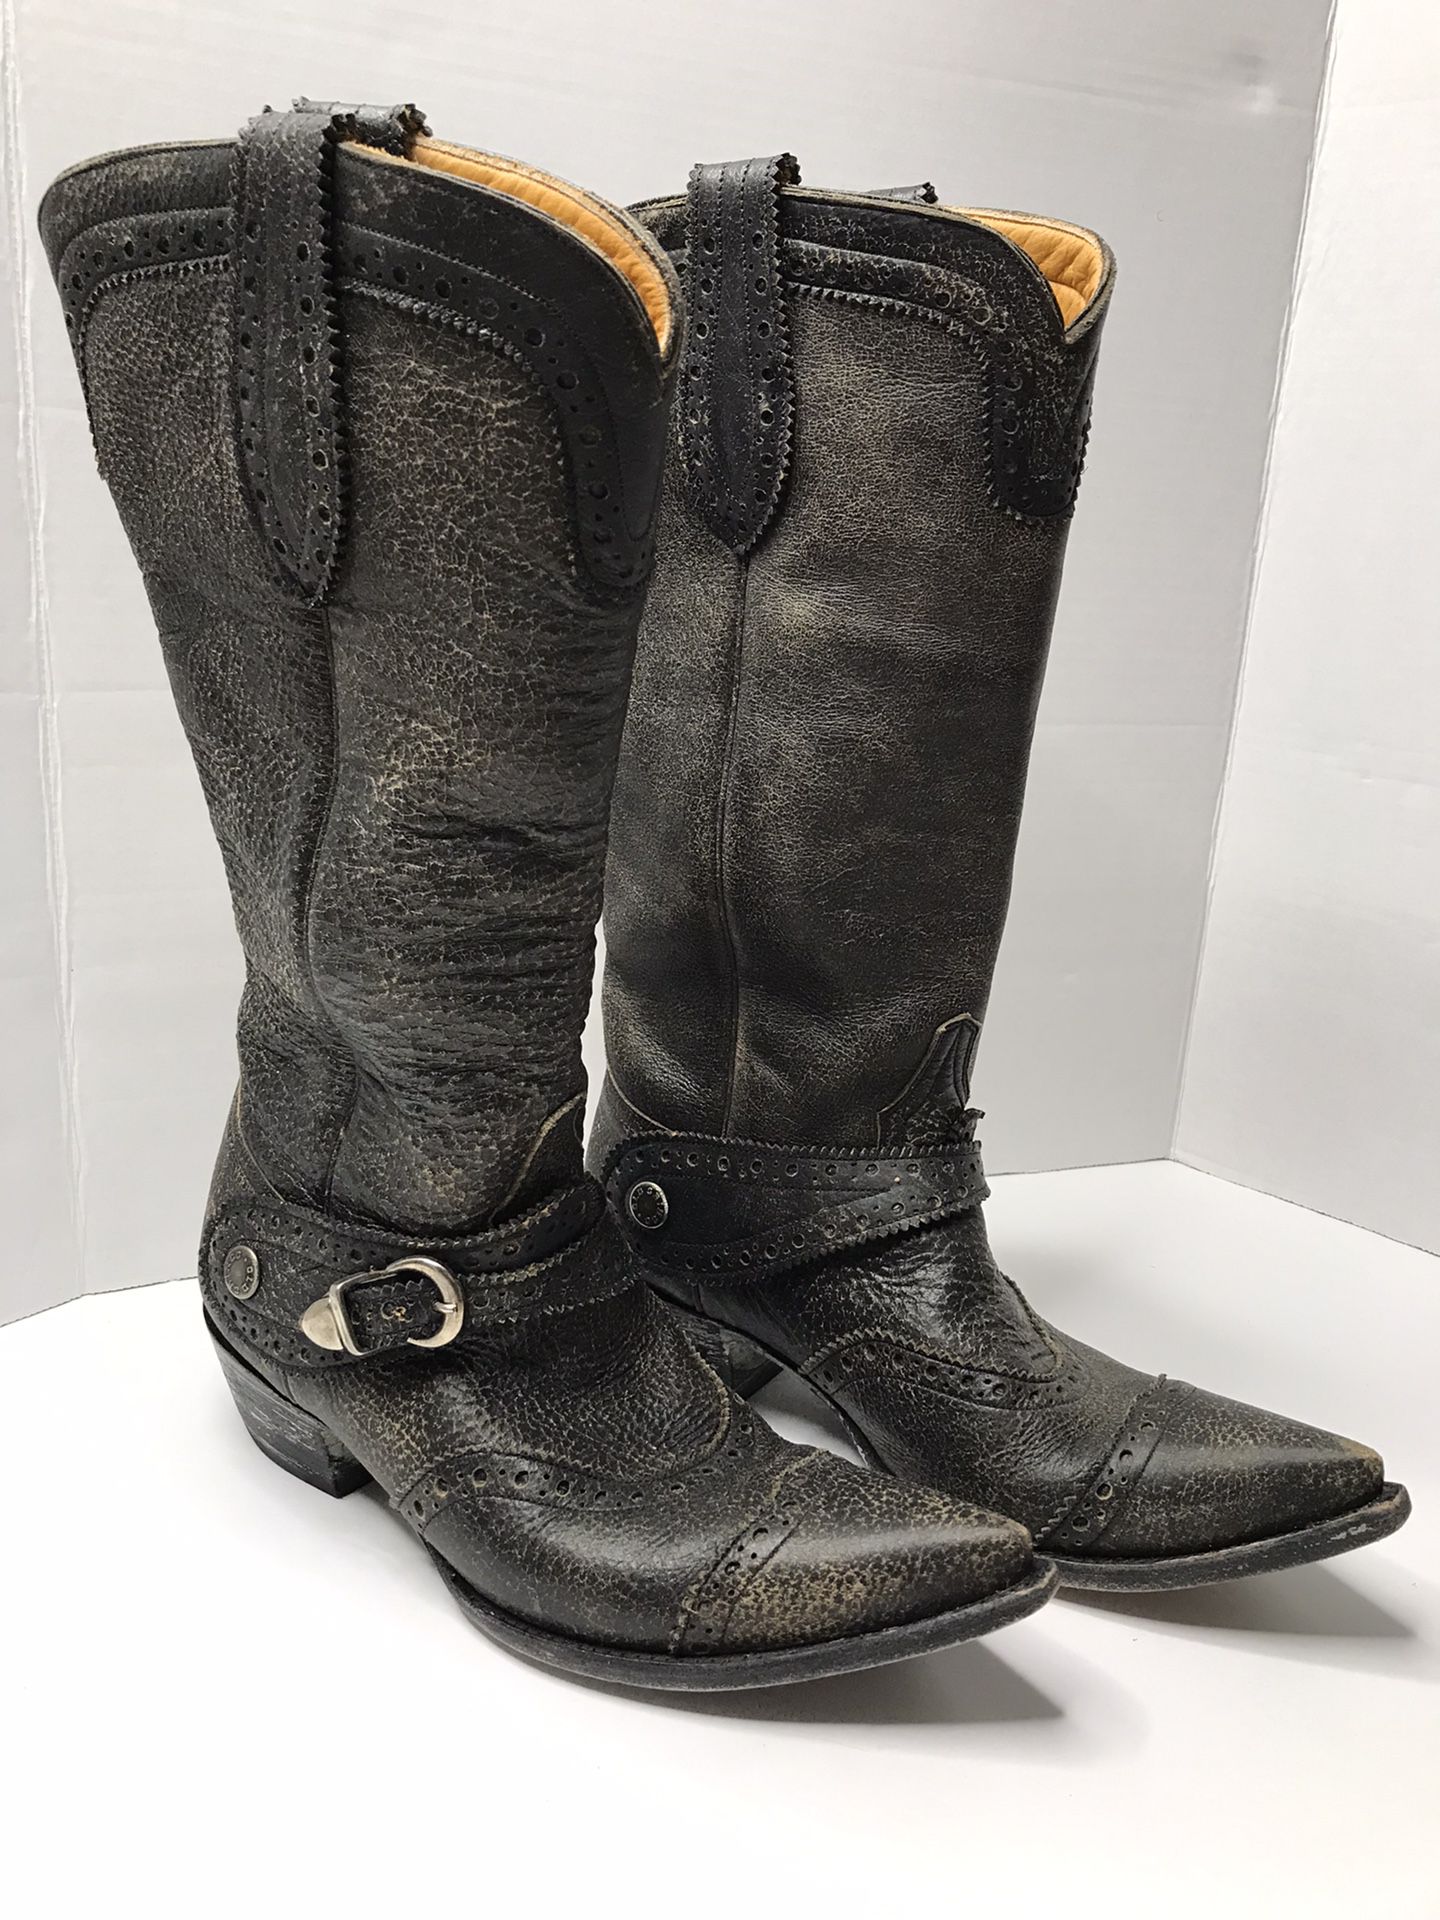 OLD GRINGO Black Distressed Women Boots 8.5B